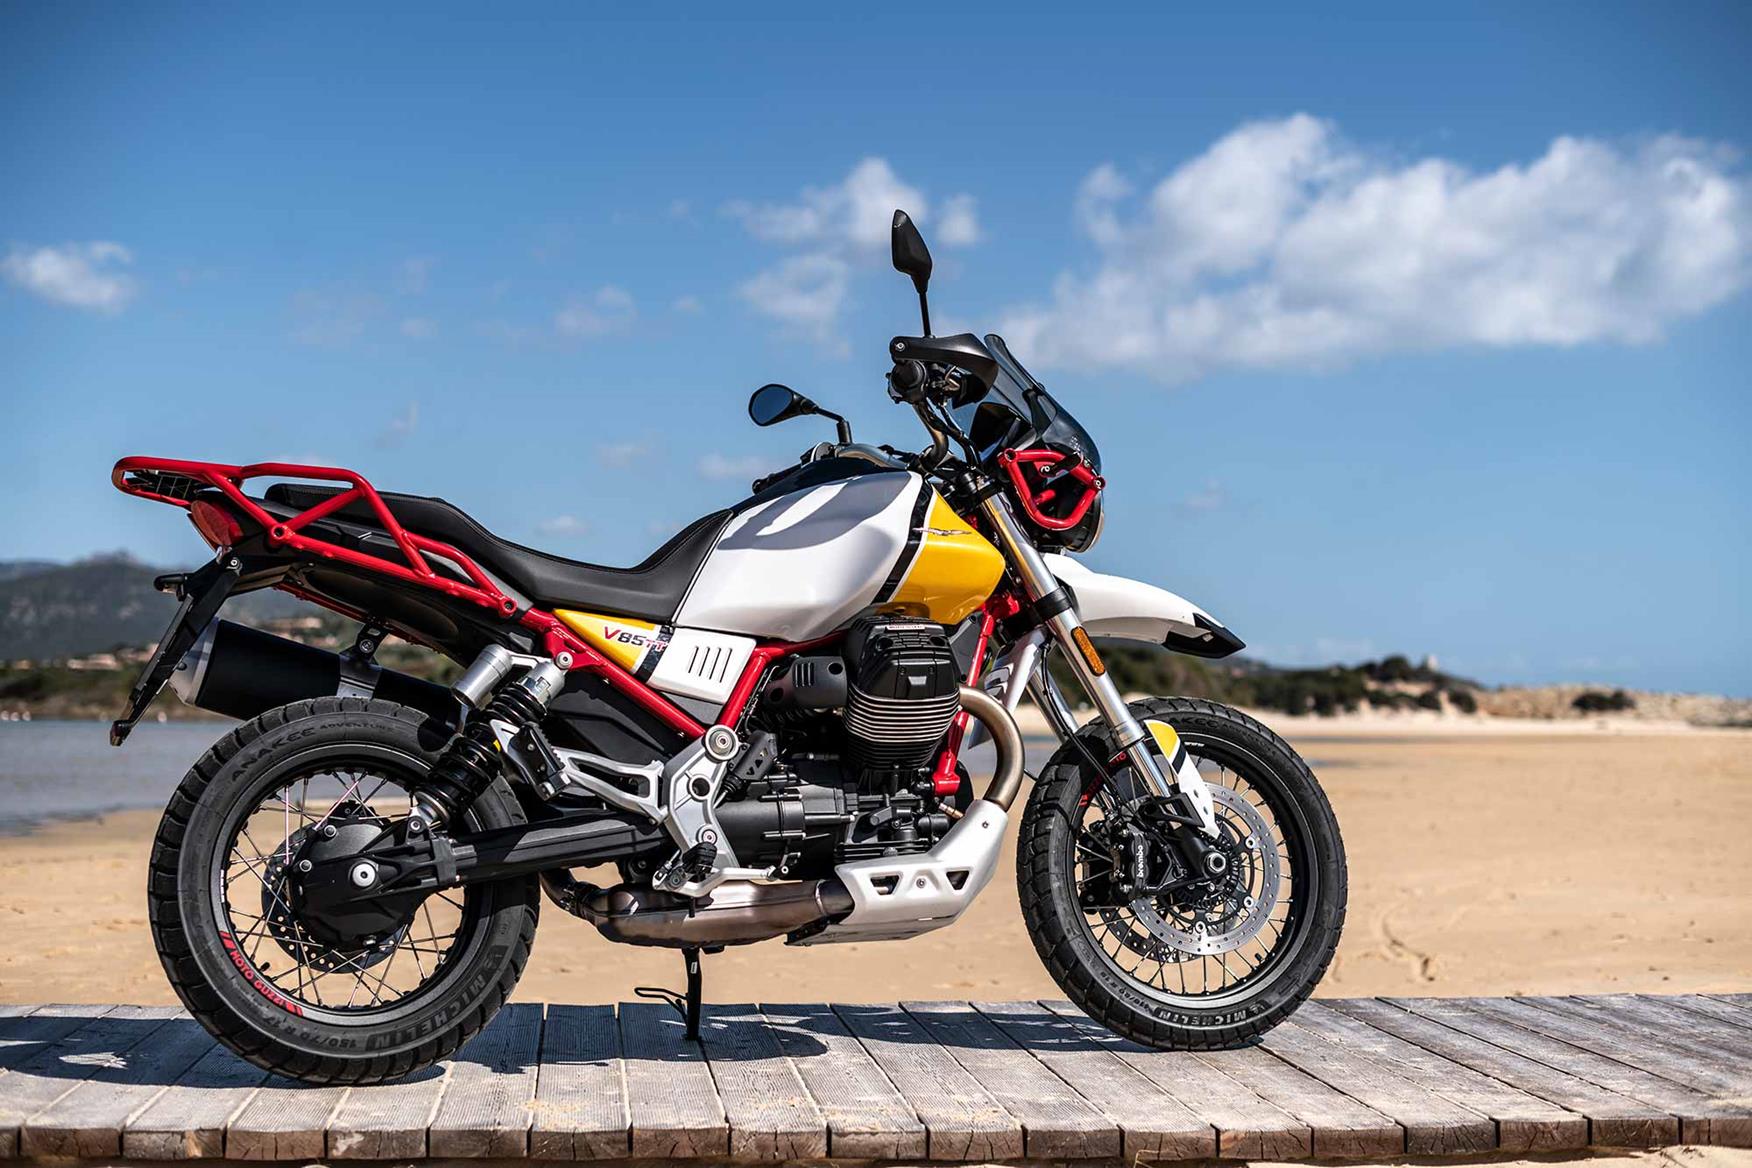 Moto Guzzi V9, Custom Bike for cities and distances. 850cc